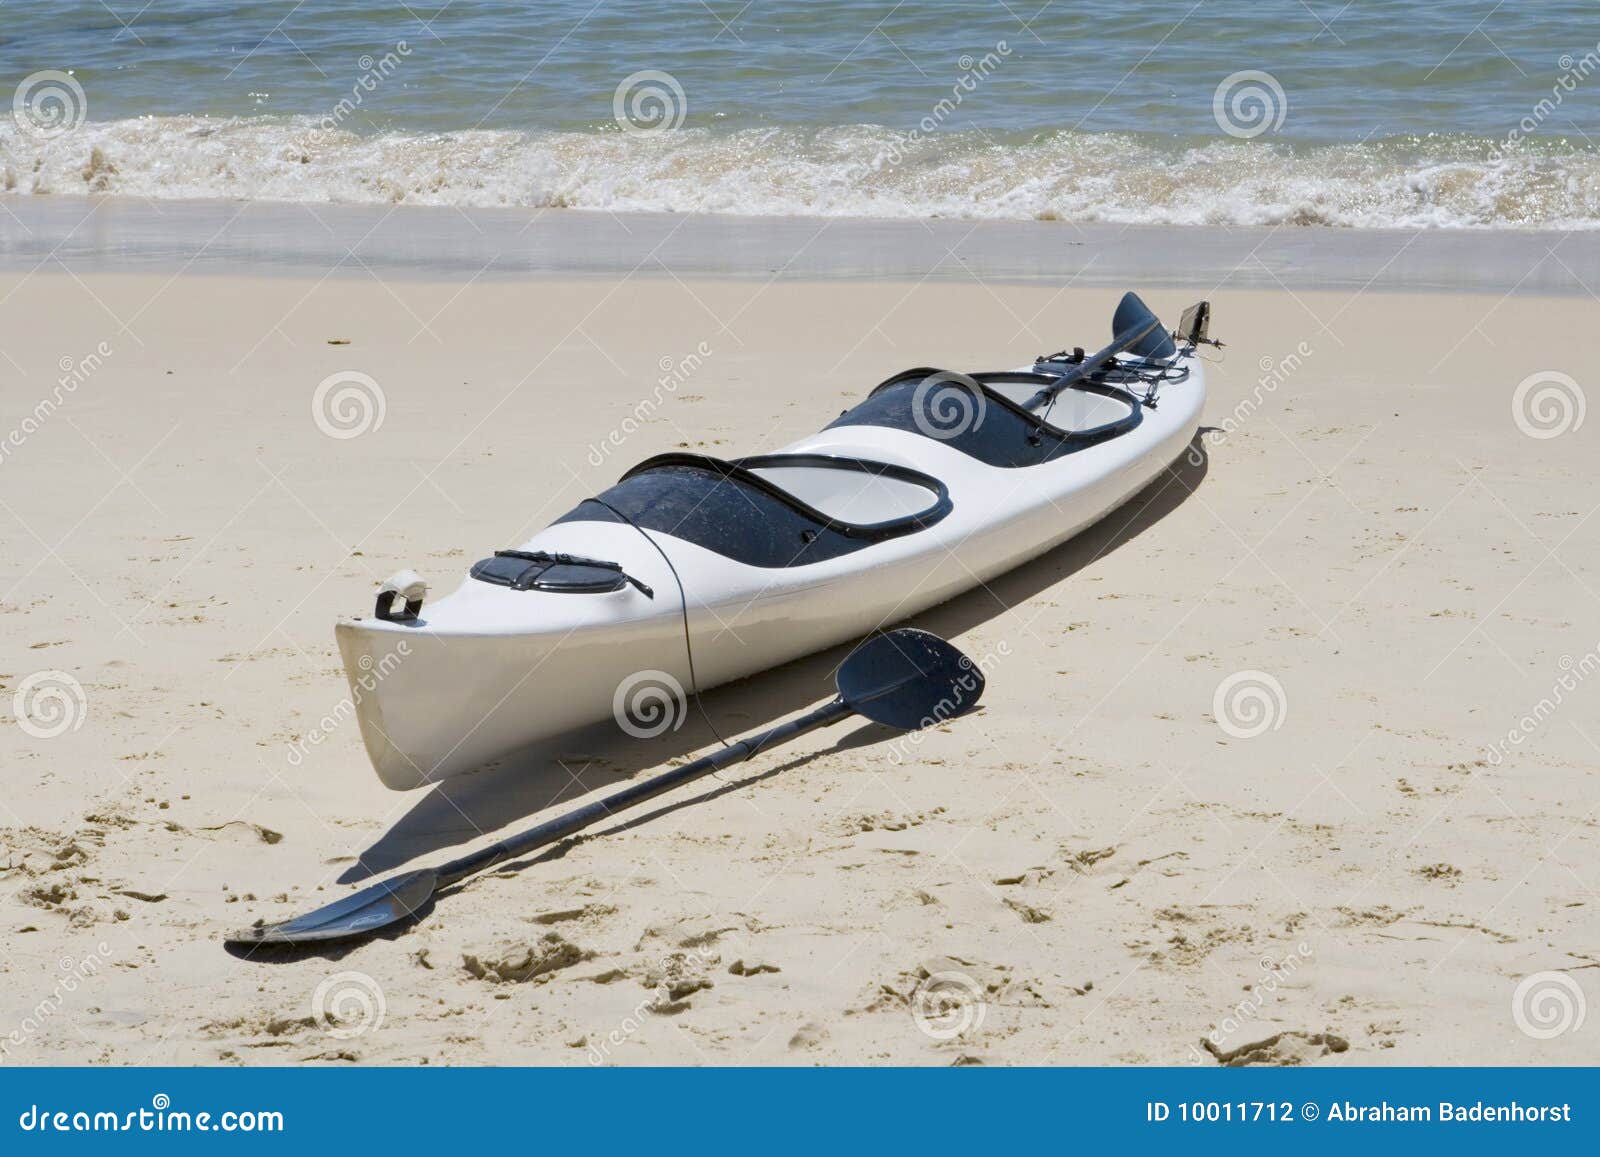 Canoe And Paddles Stock Photography - Image: 10011712